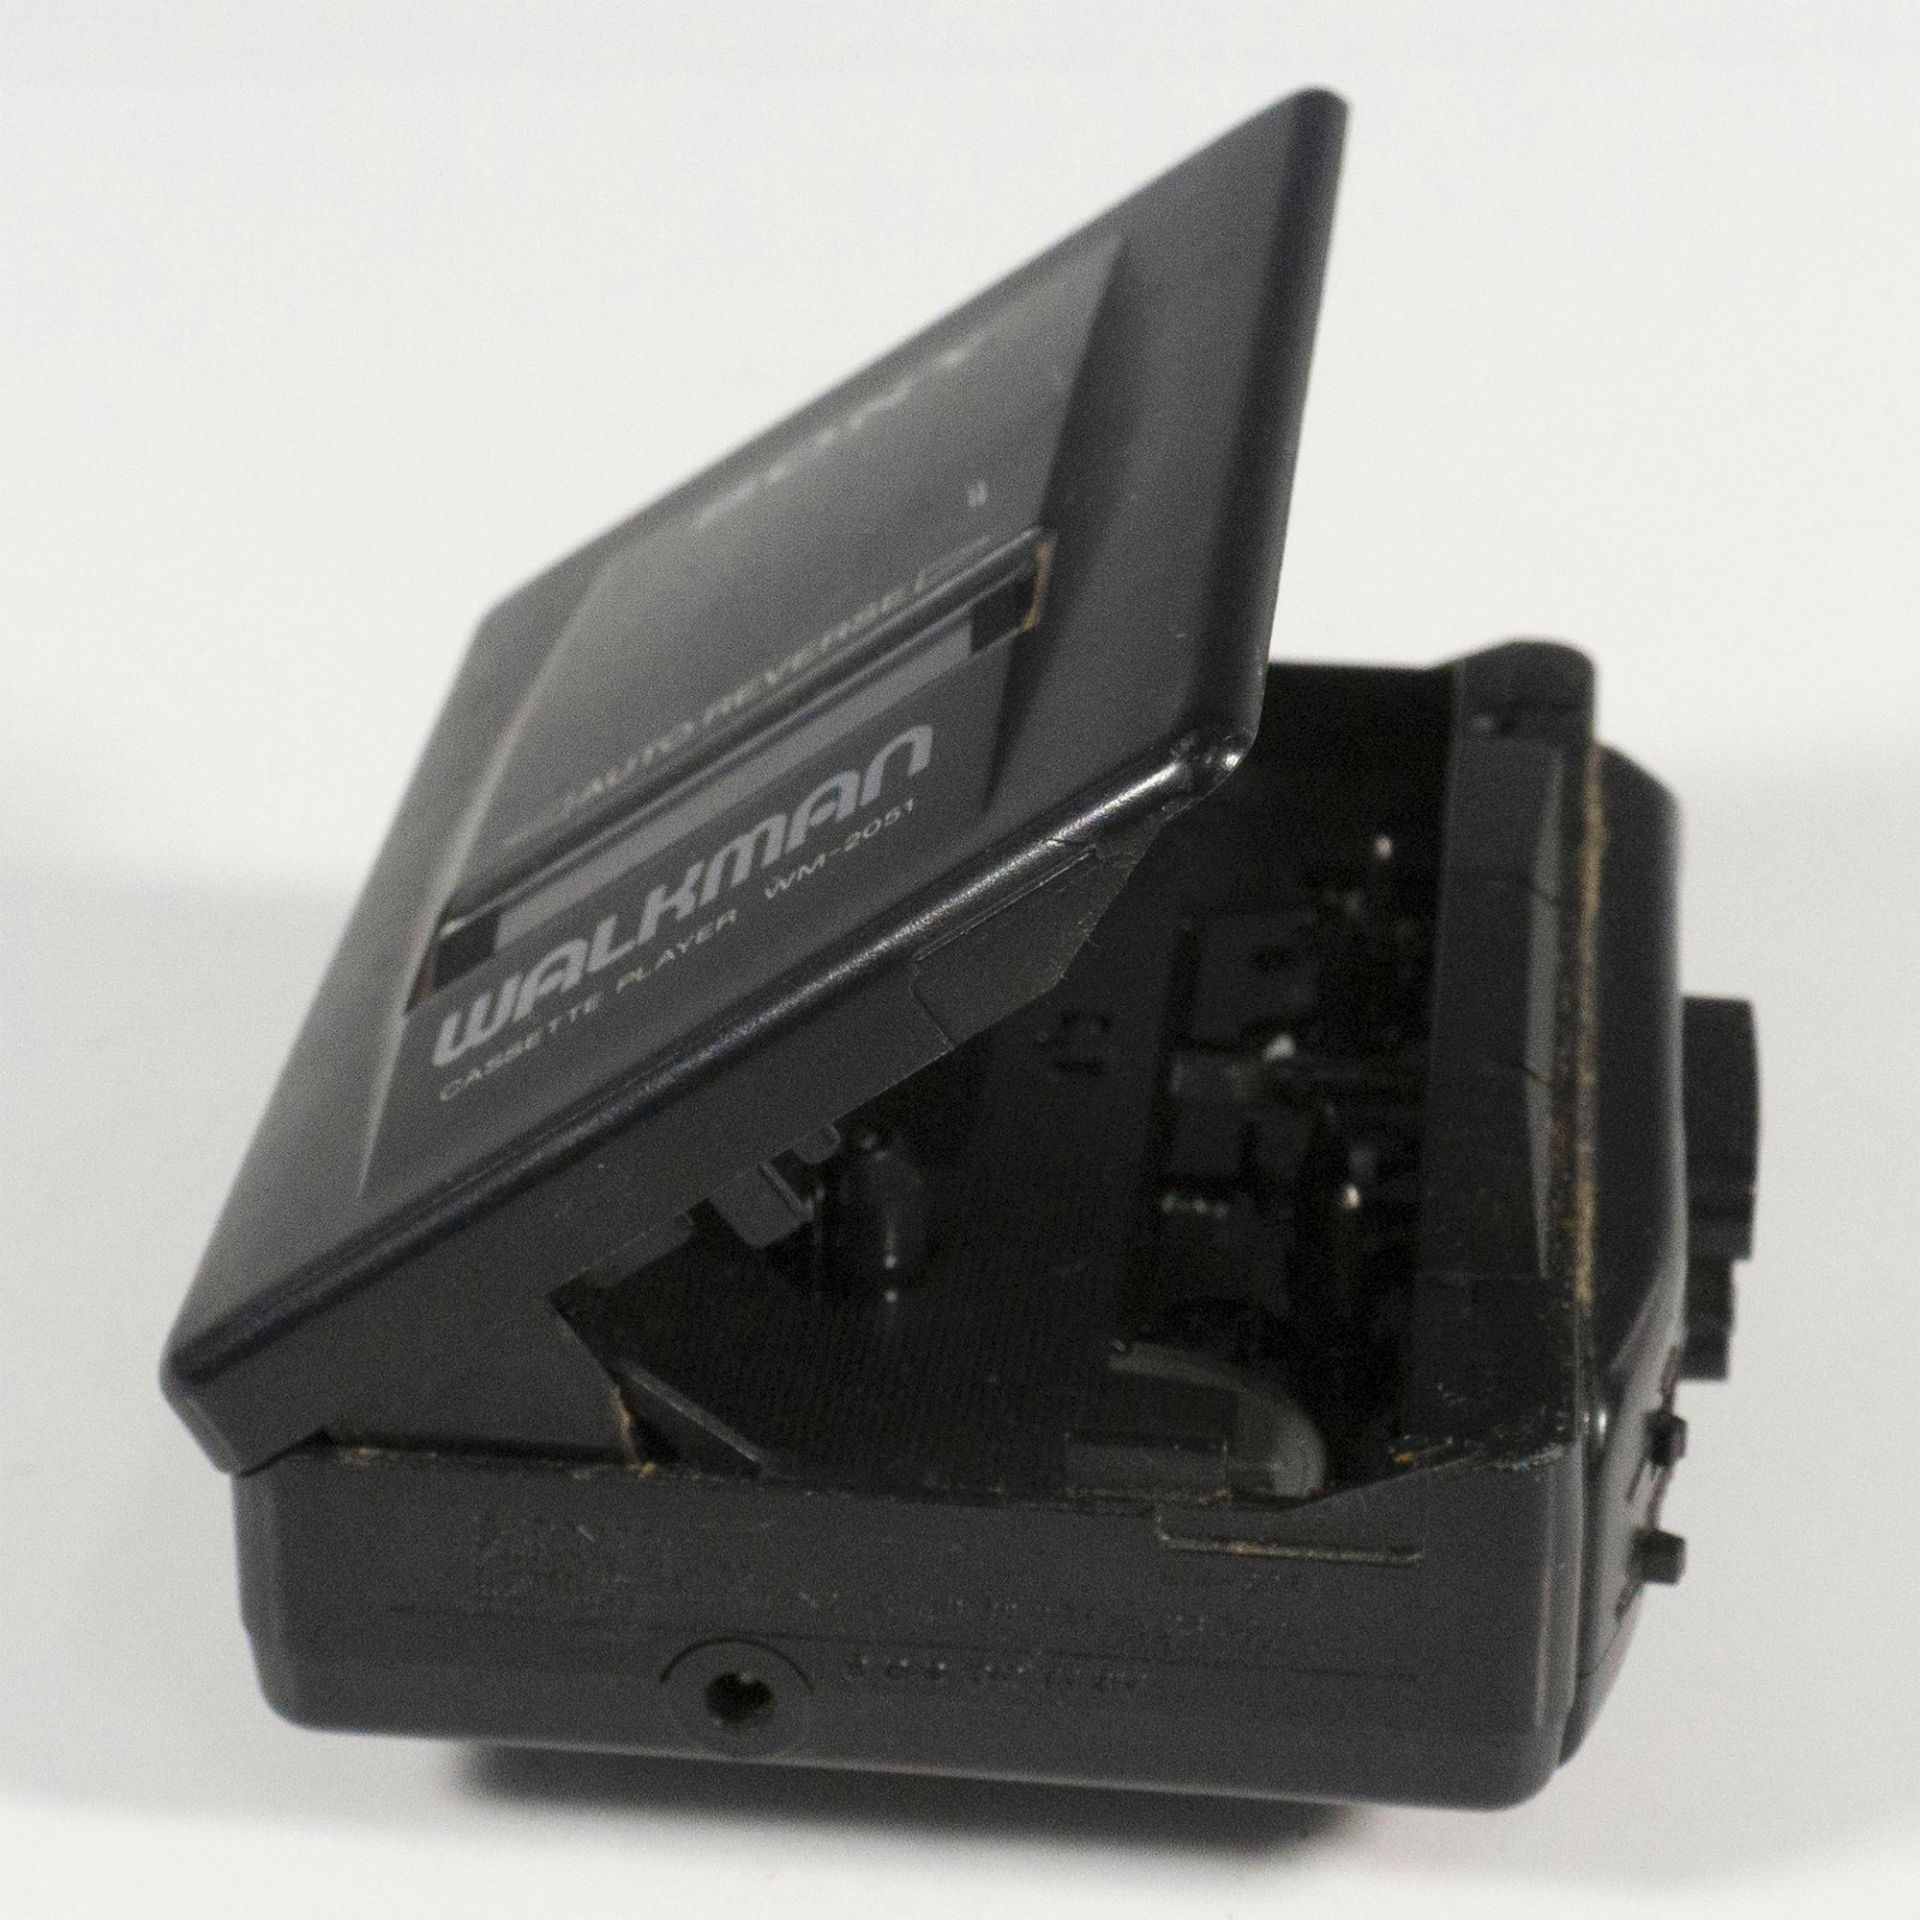 Sony Walkman WM-2051 Portable Cassette Player - Image 4 of 5